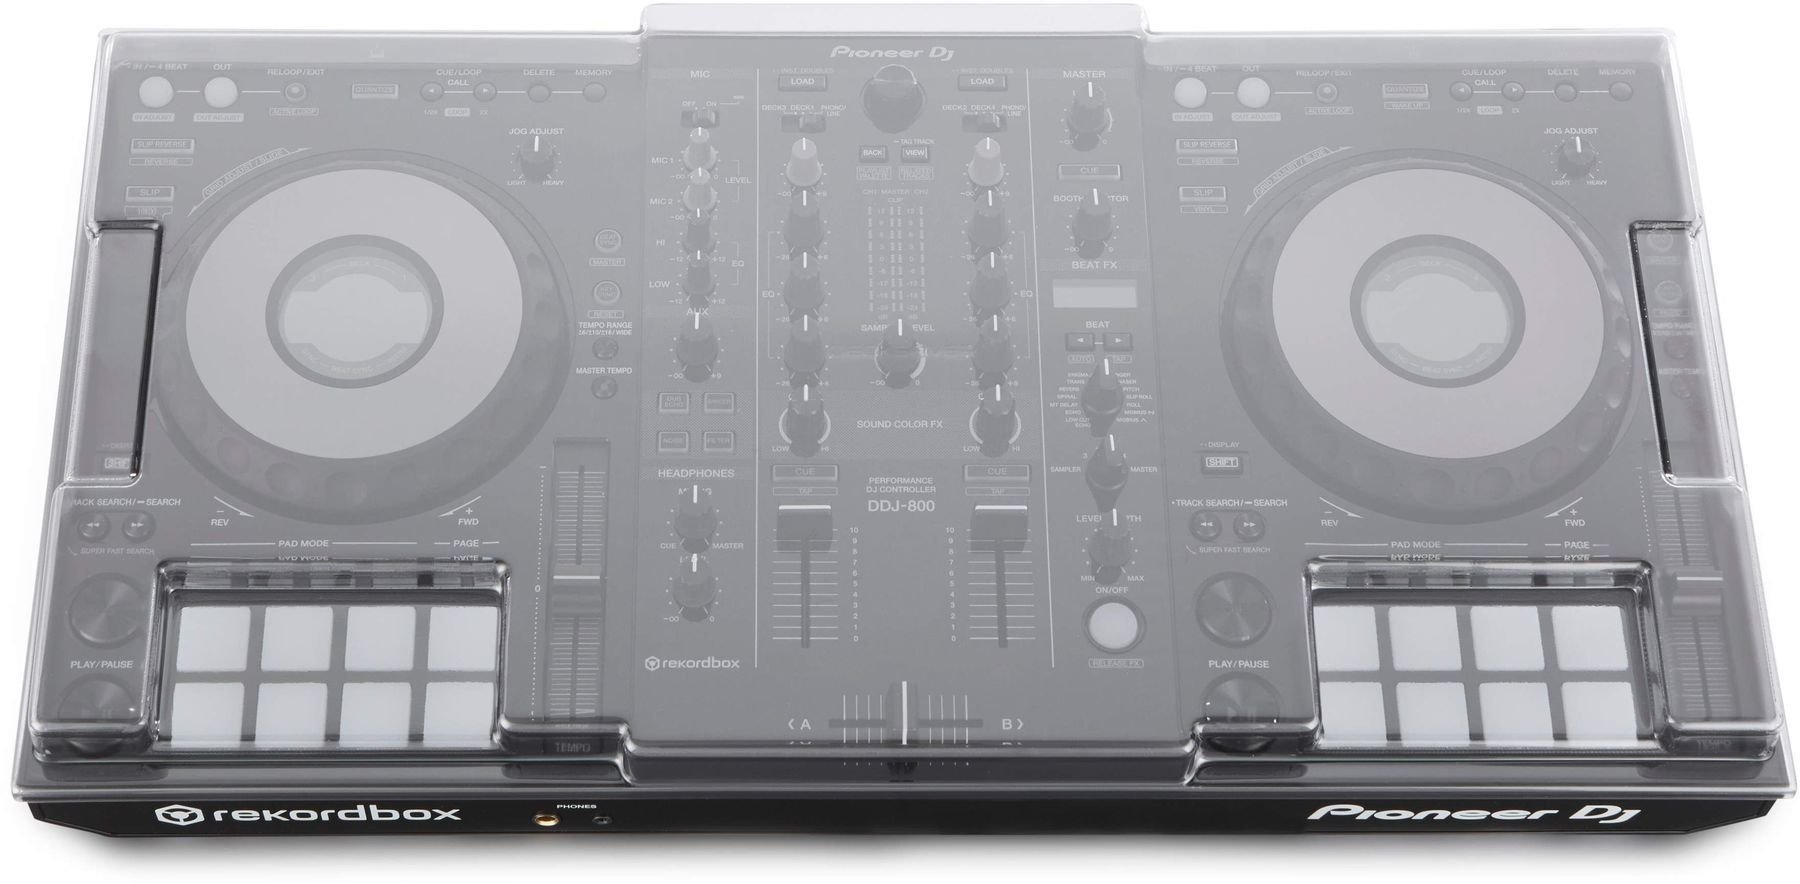 Protective cover fo DJ controller Decksaver Pioneer DDJ-800